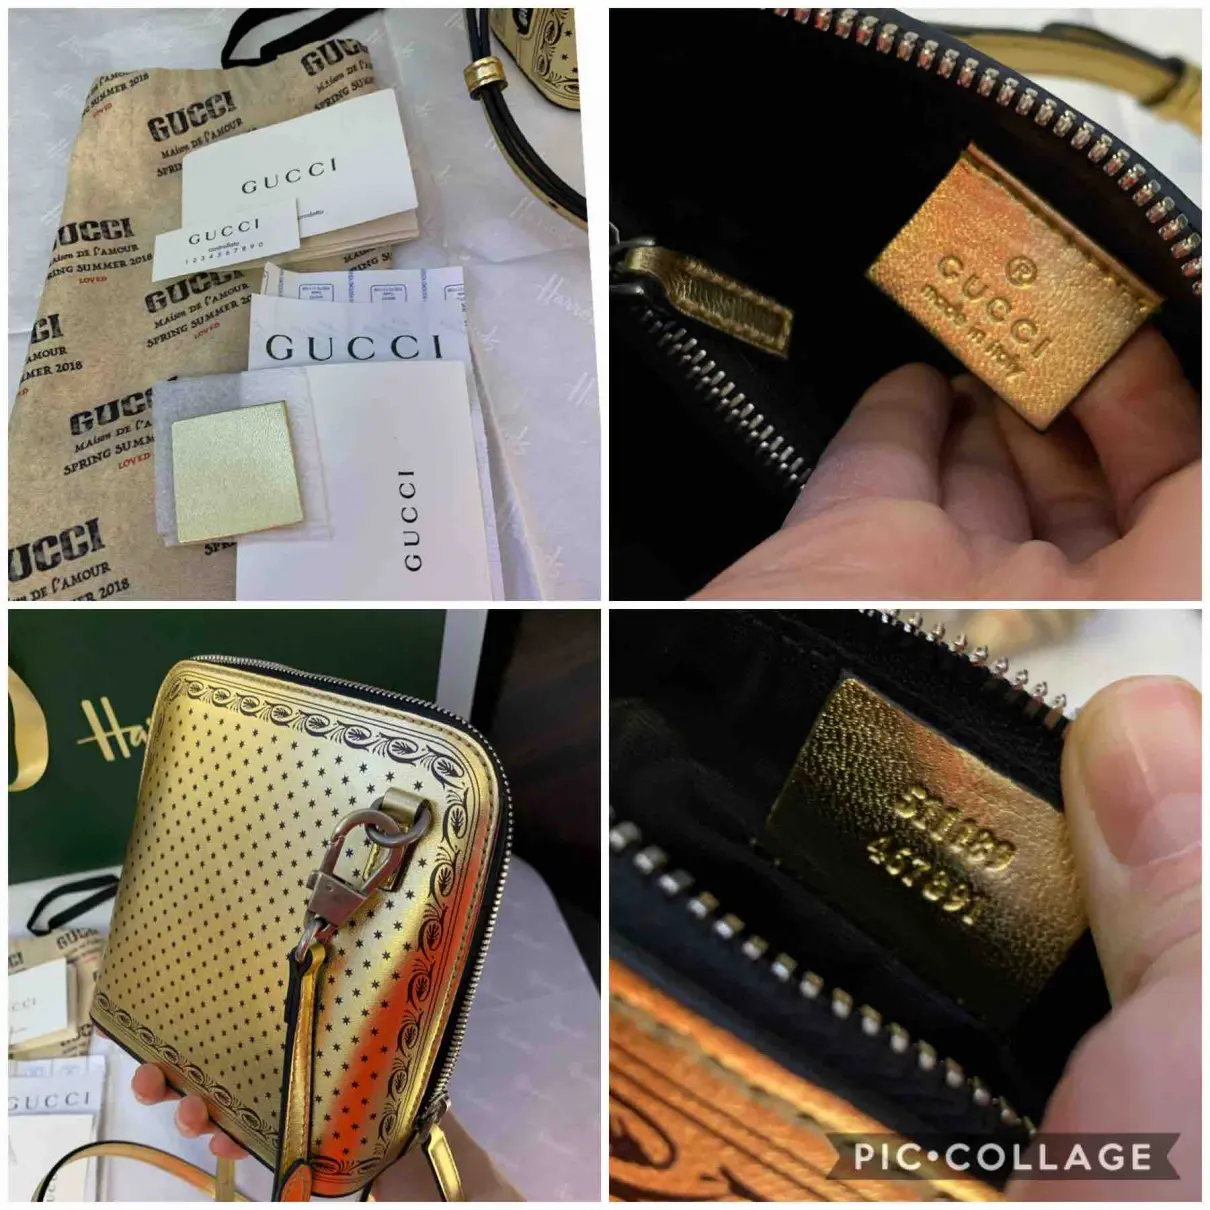 Guccy minibag leather handbag Gucci